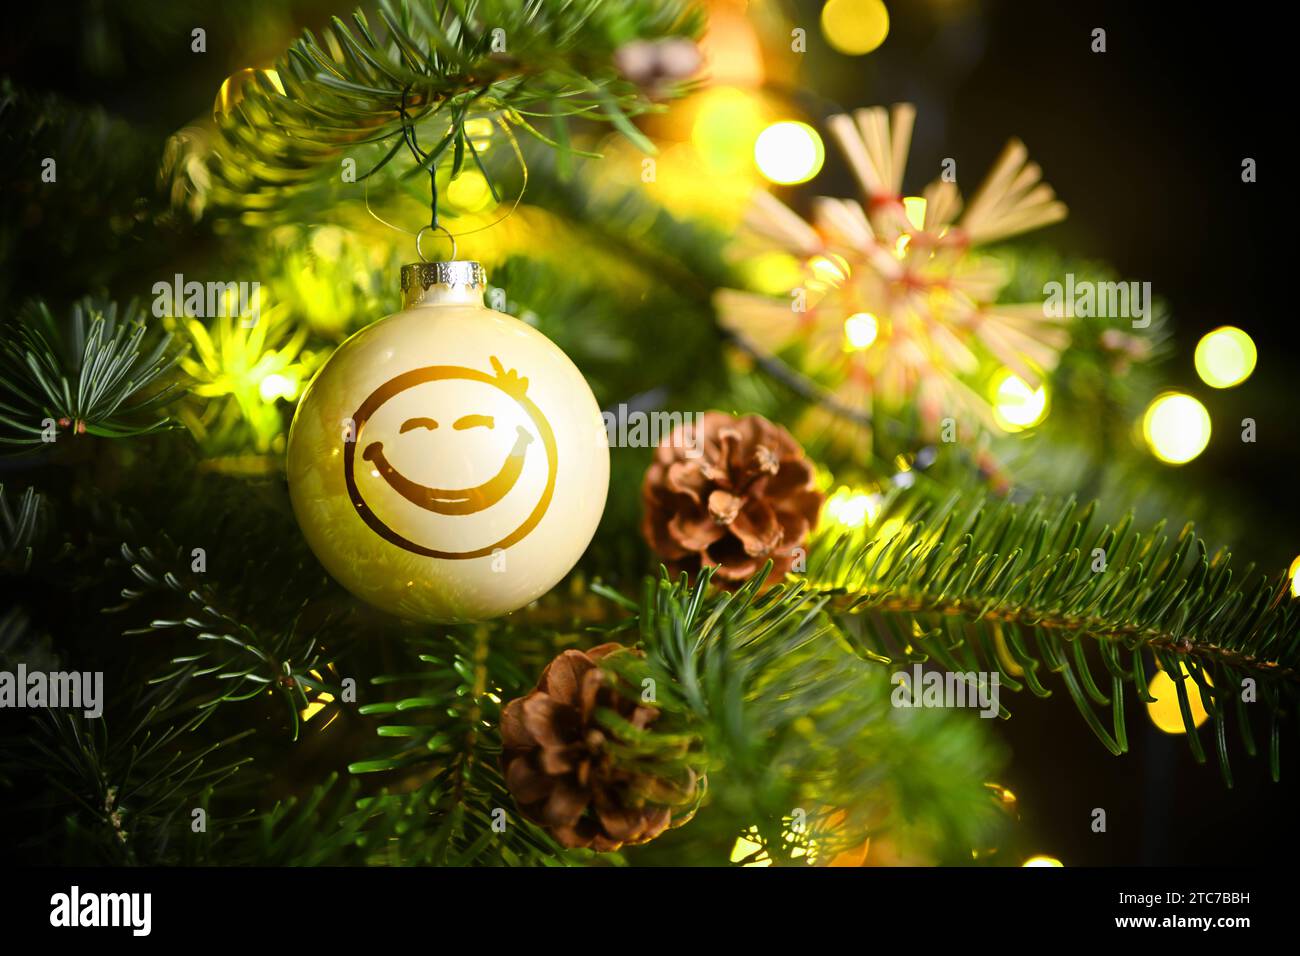 FOTOMONTAGE, Weihnachtskugel mit Smiley hängt an einem Weihnachtsbaum *** FOTOMONTAGE, Christmas bauble with smiley hanging on a Christmas tree Stock Photo